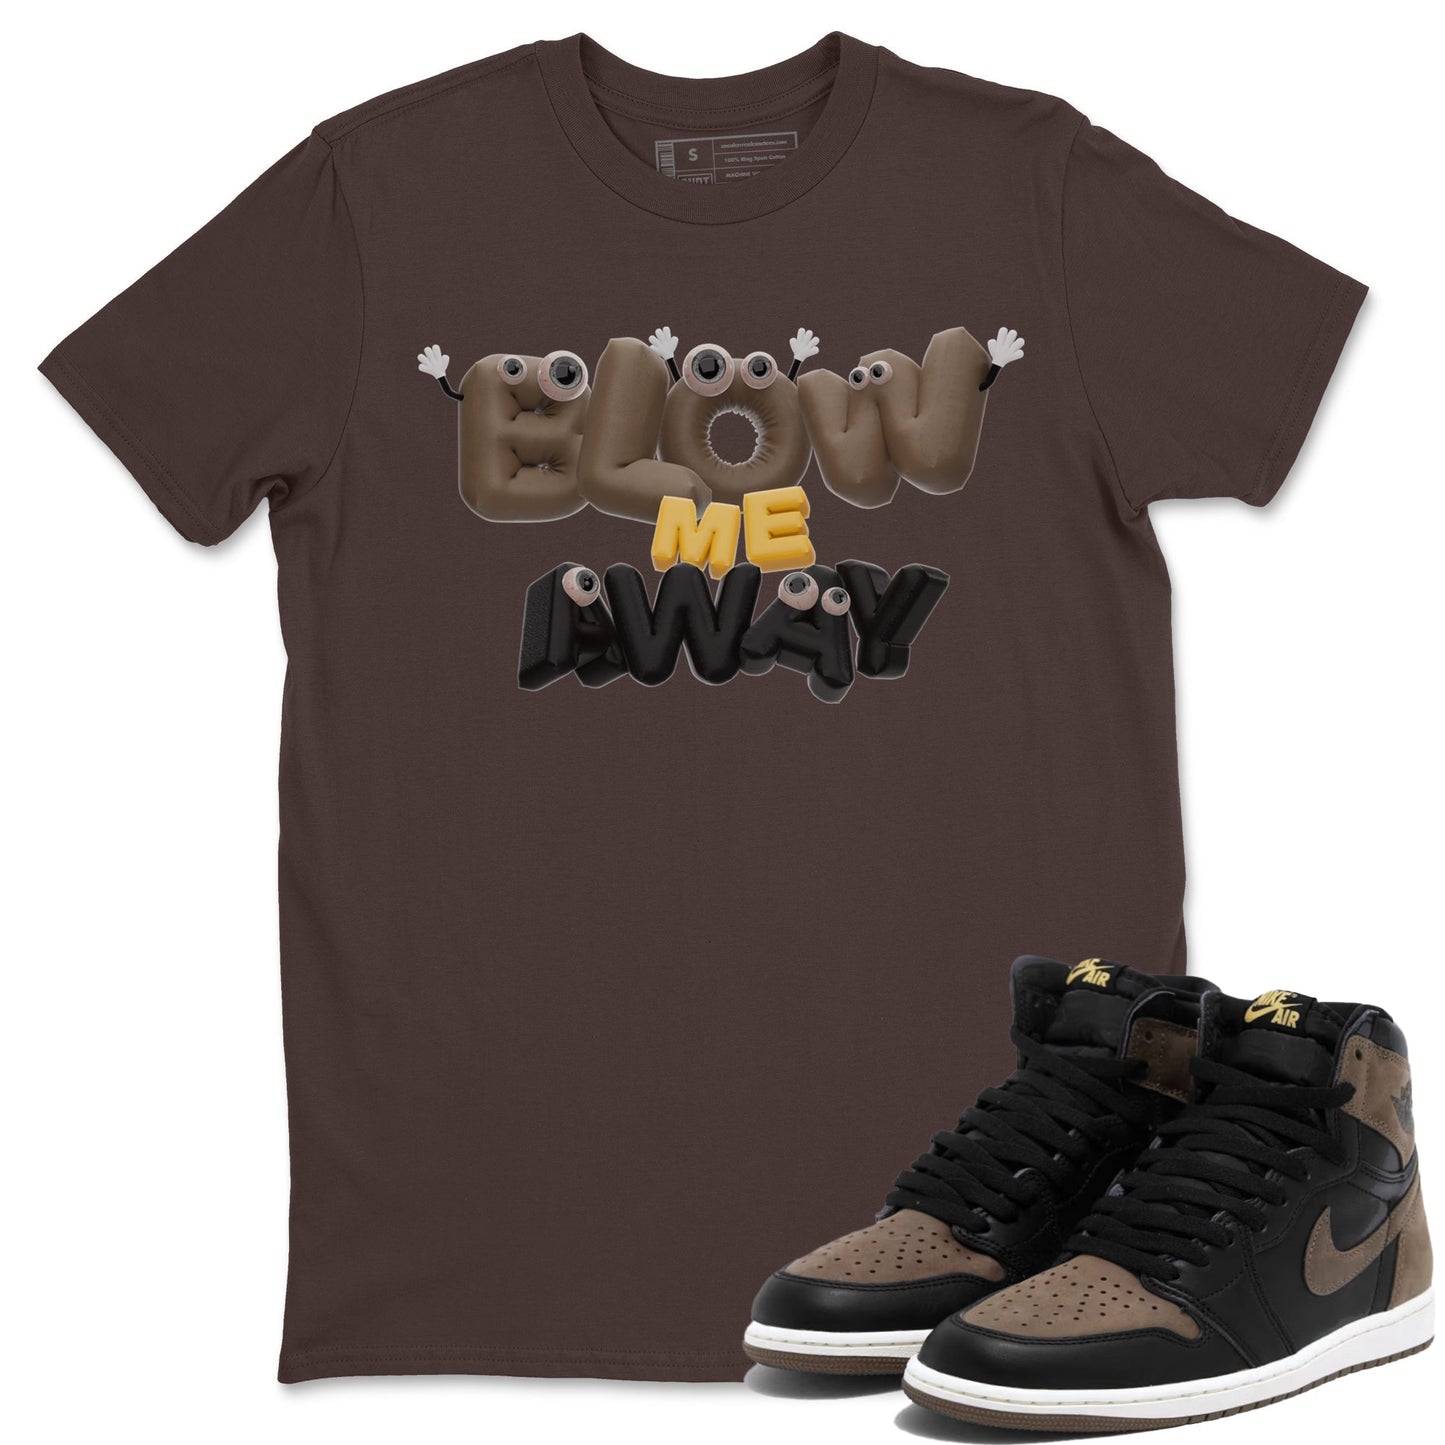 Air Jordan 1 Palomino shirt to match jordans Blow Me Away Streetwear Sneaker Shirt AJ1 Palomino Drip Gear Zone Sneaker Matching Clothing Unisex Dark Chocolate 1 T-Shirt